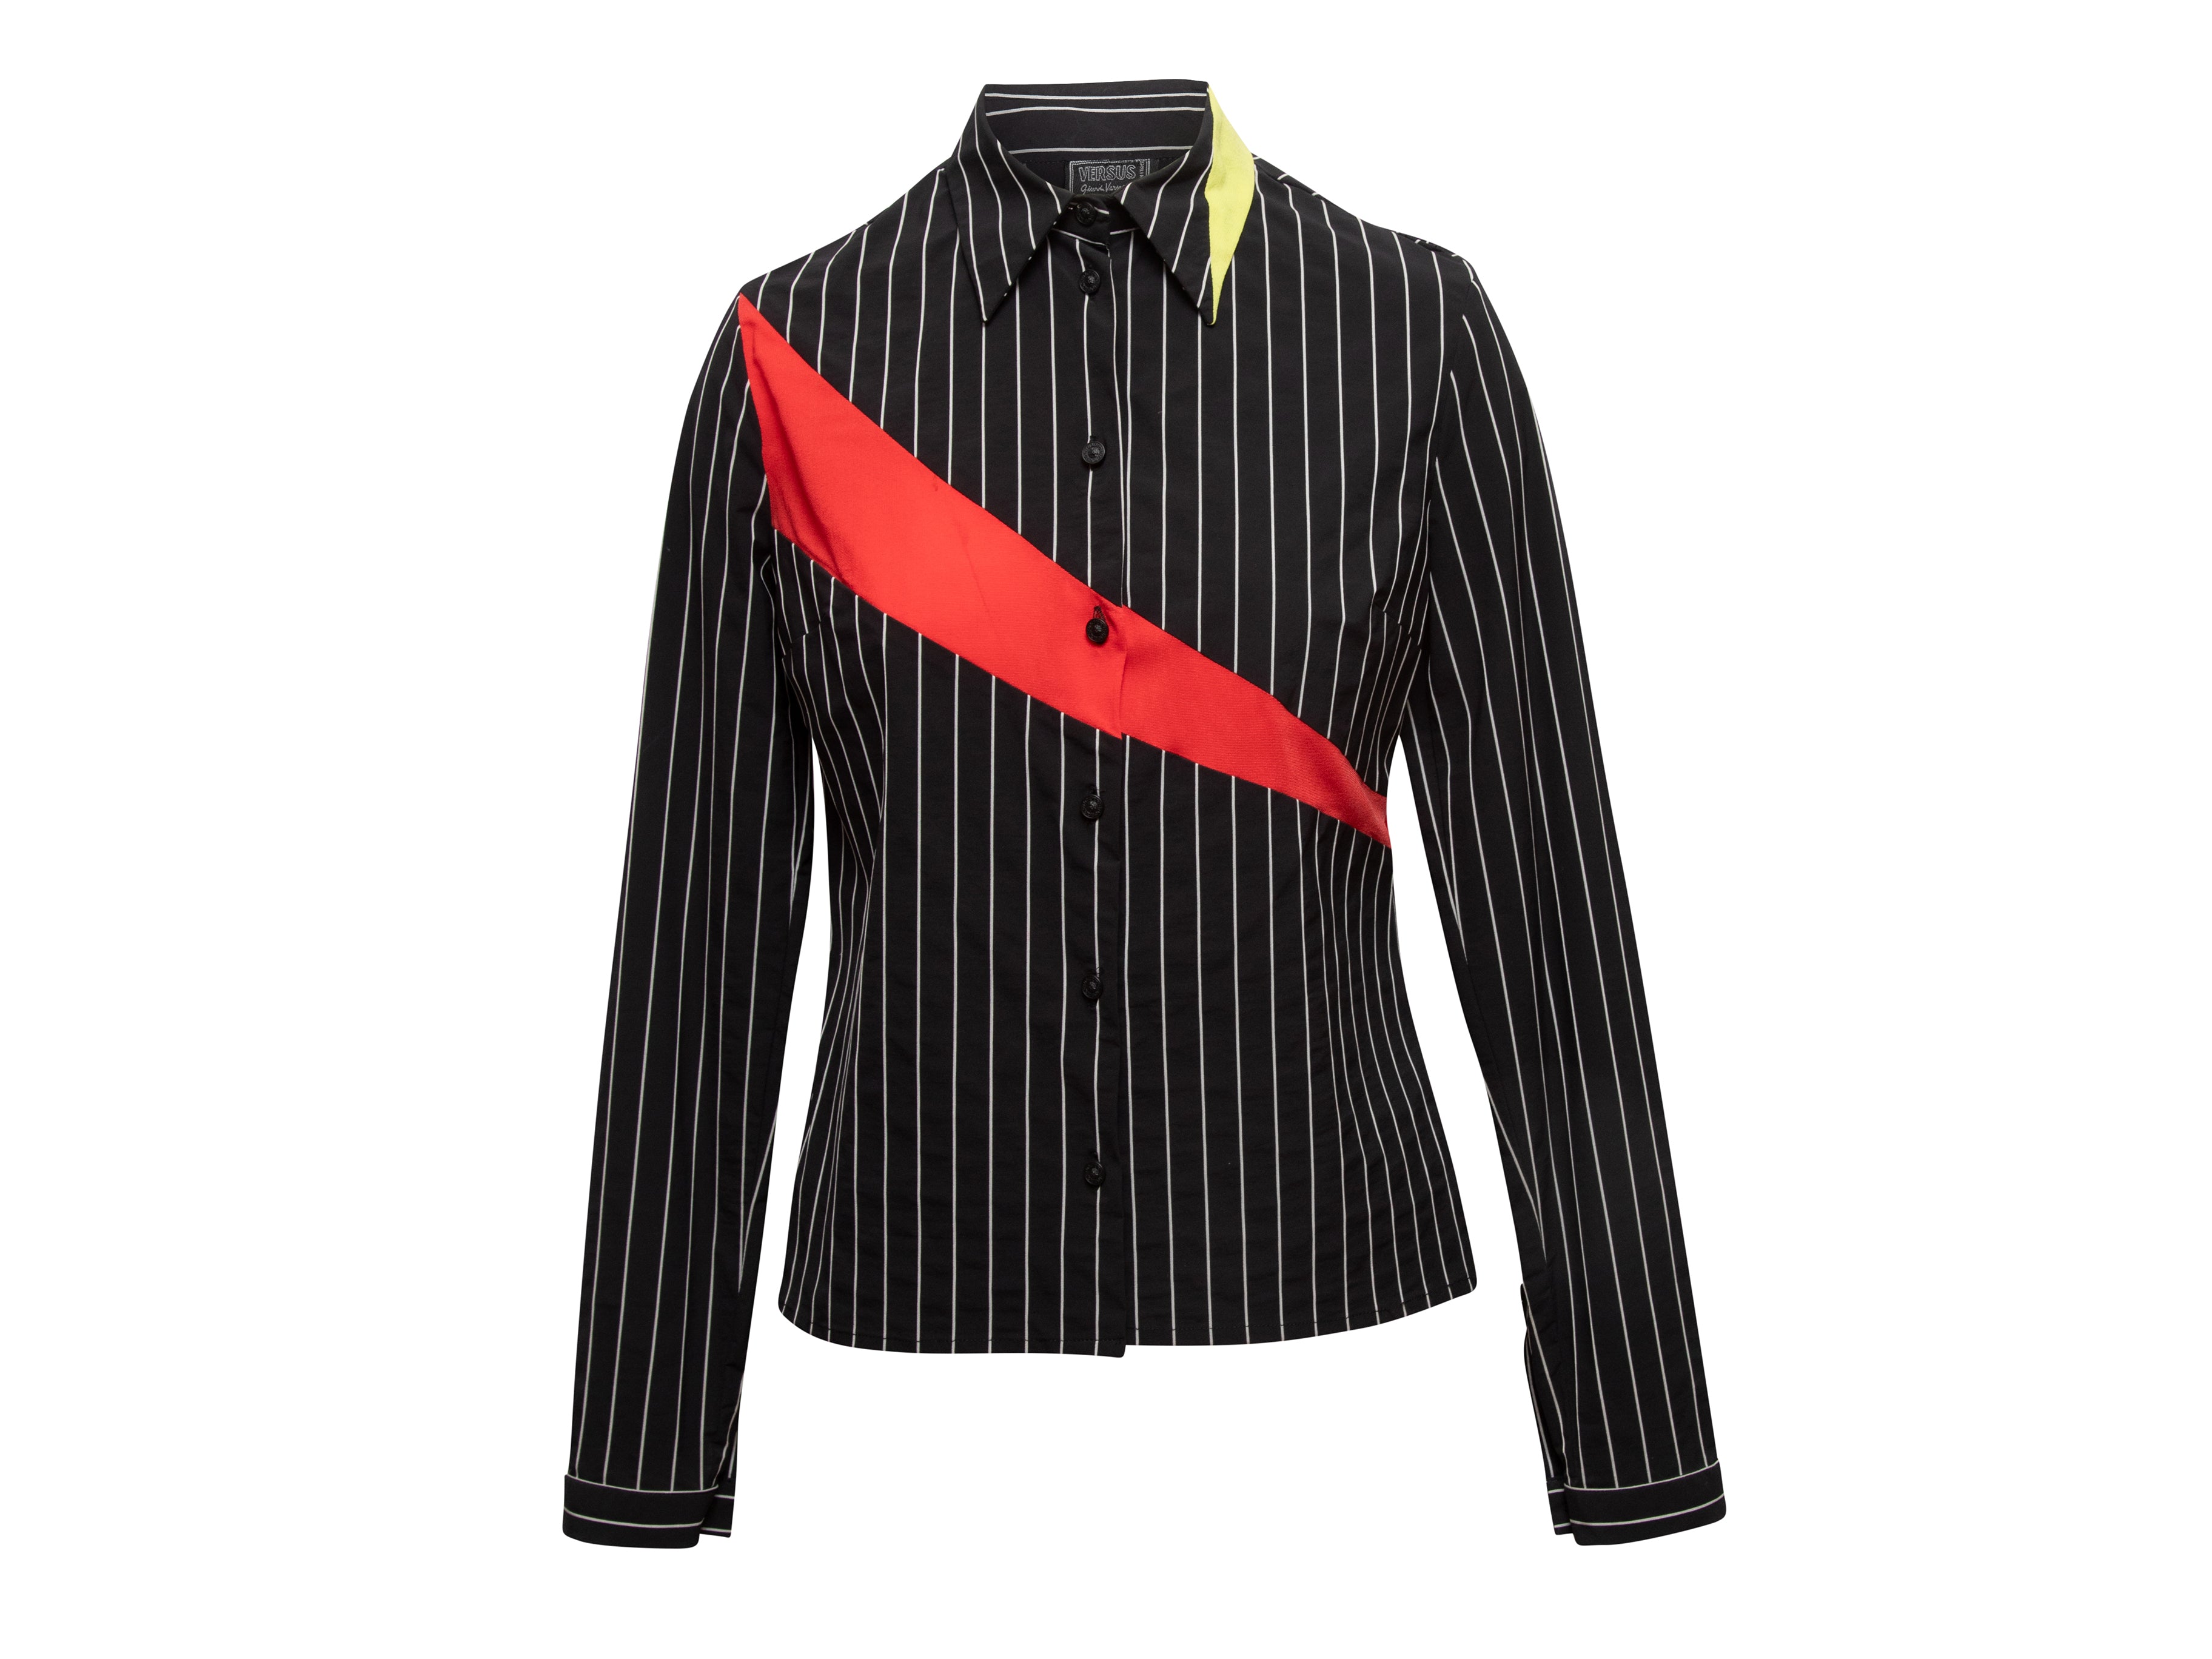 Black & Multicolor Versus Gianni Versace Striped Button-Up Top Size S - Designer Revival